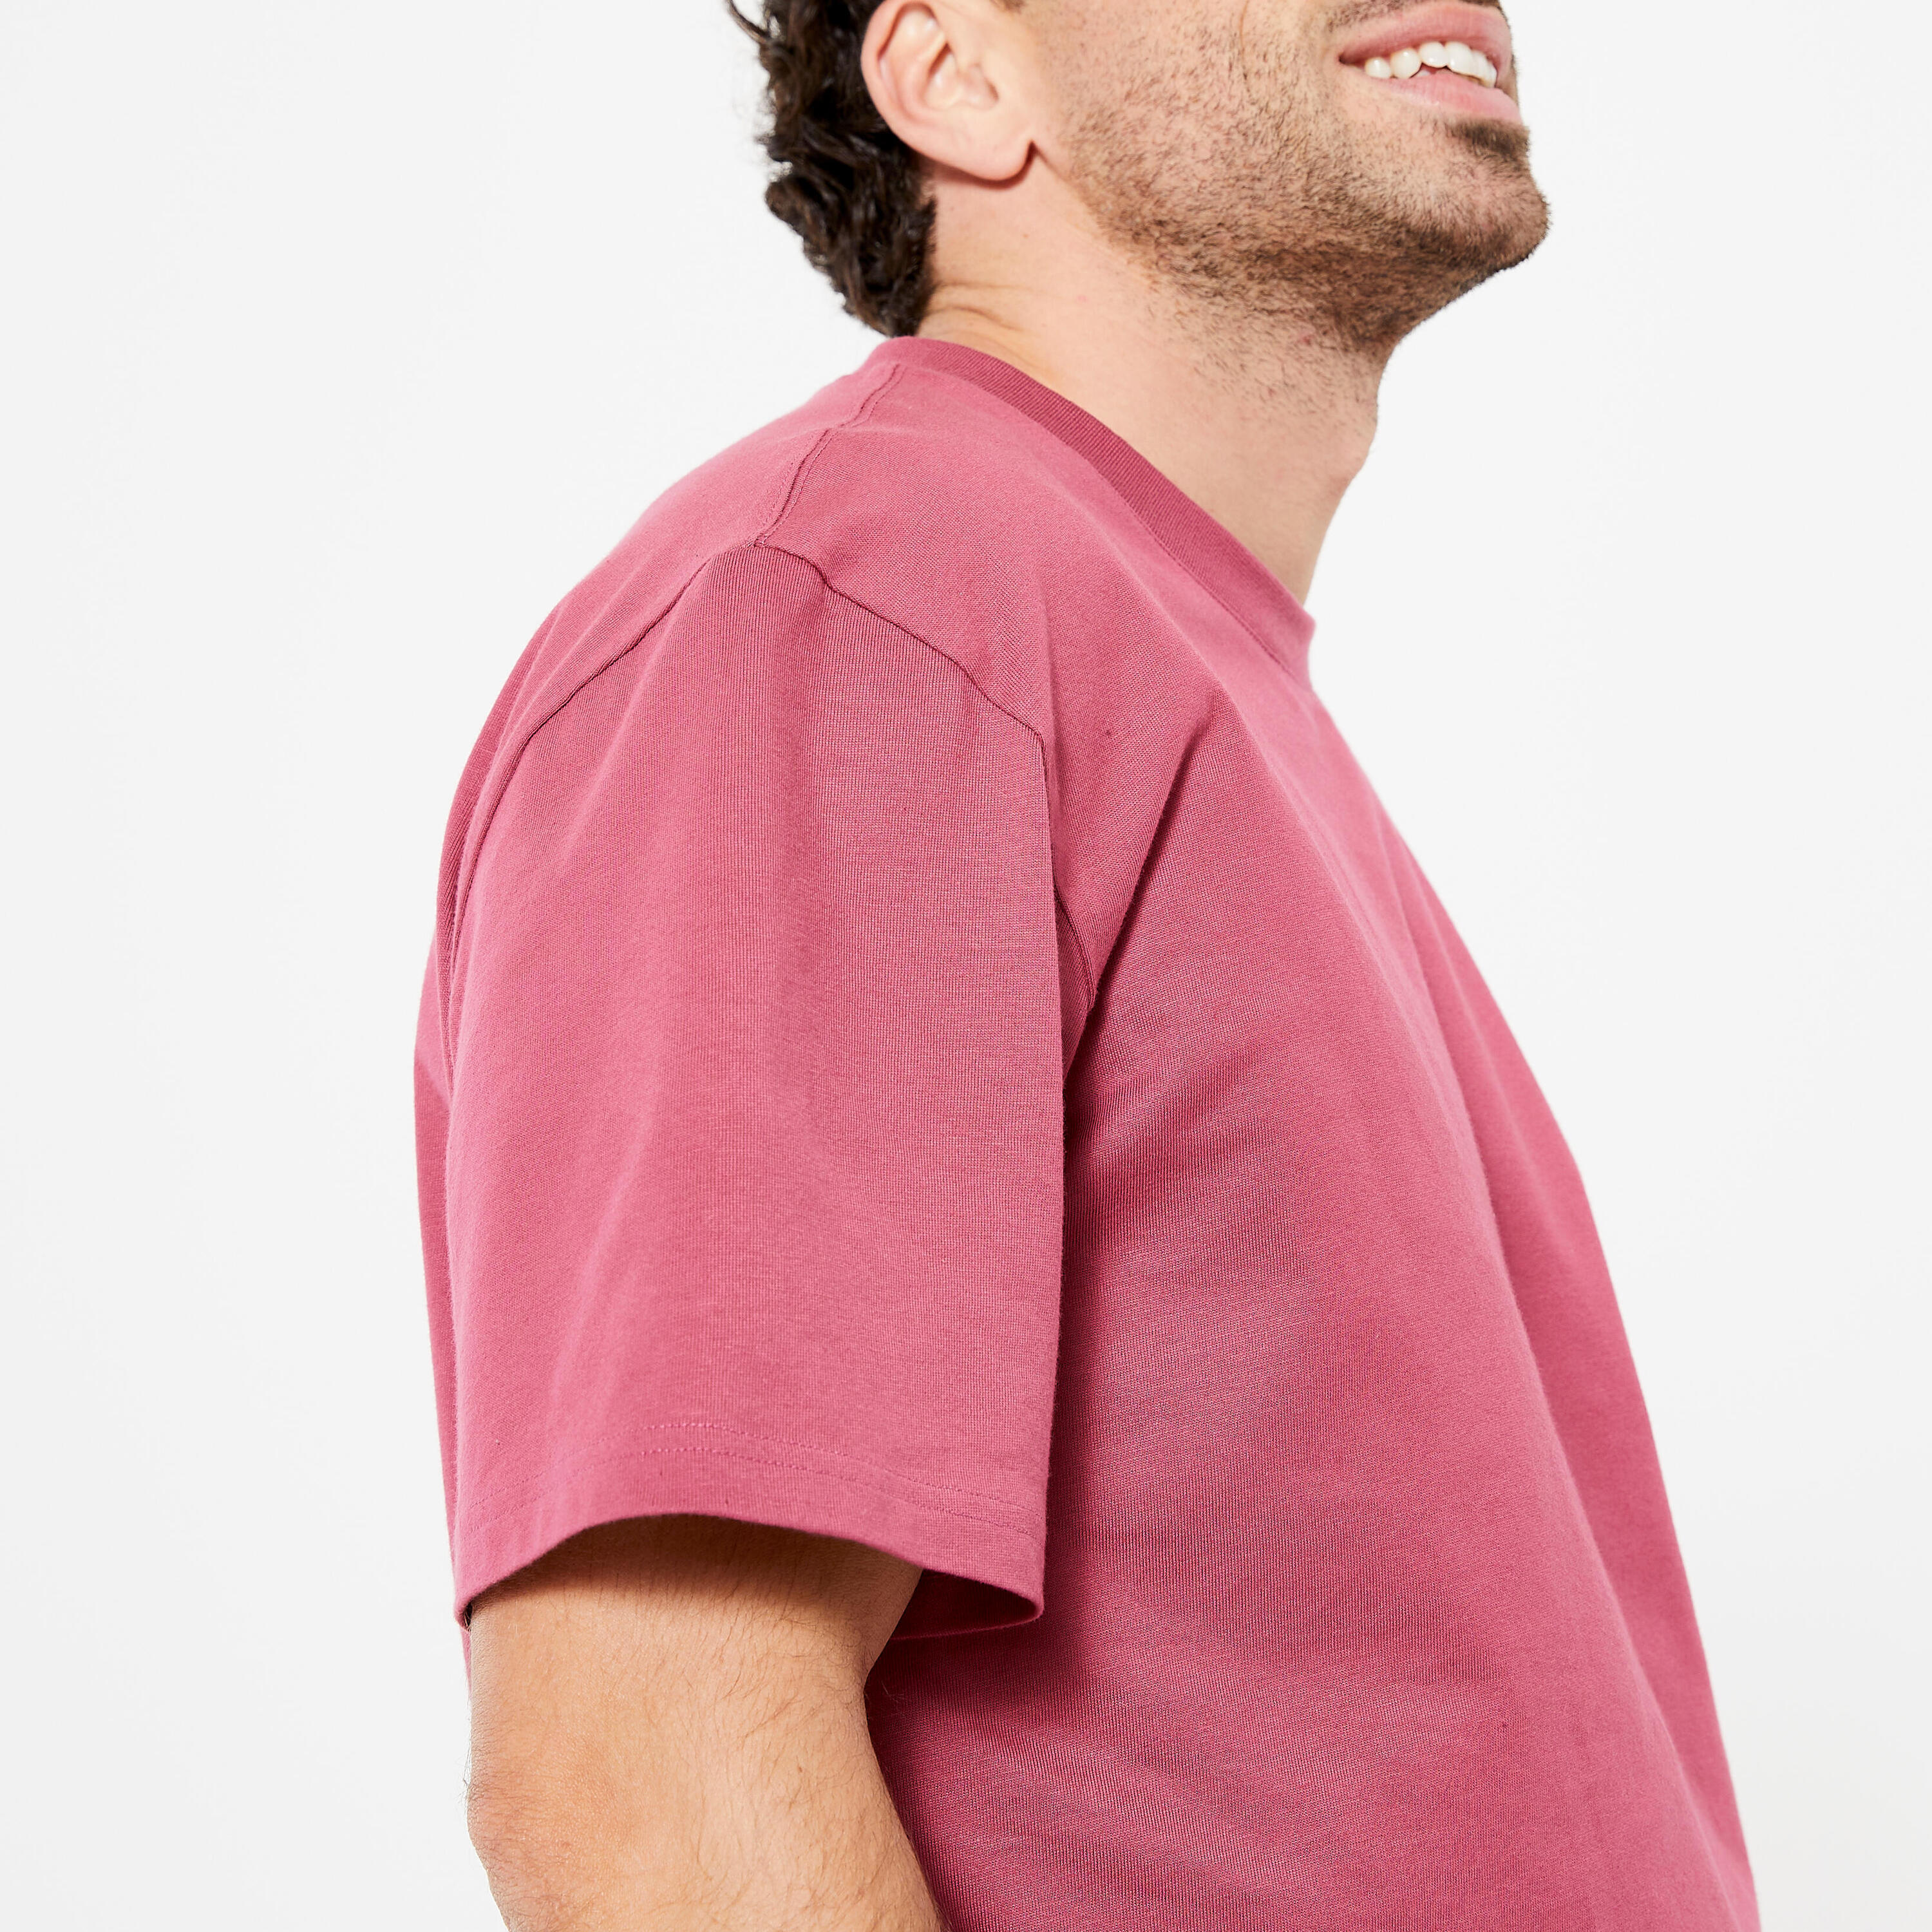 Men's Fitness T-Shirt 500 Essentials - Pink 4/5